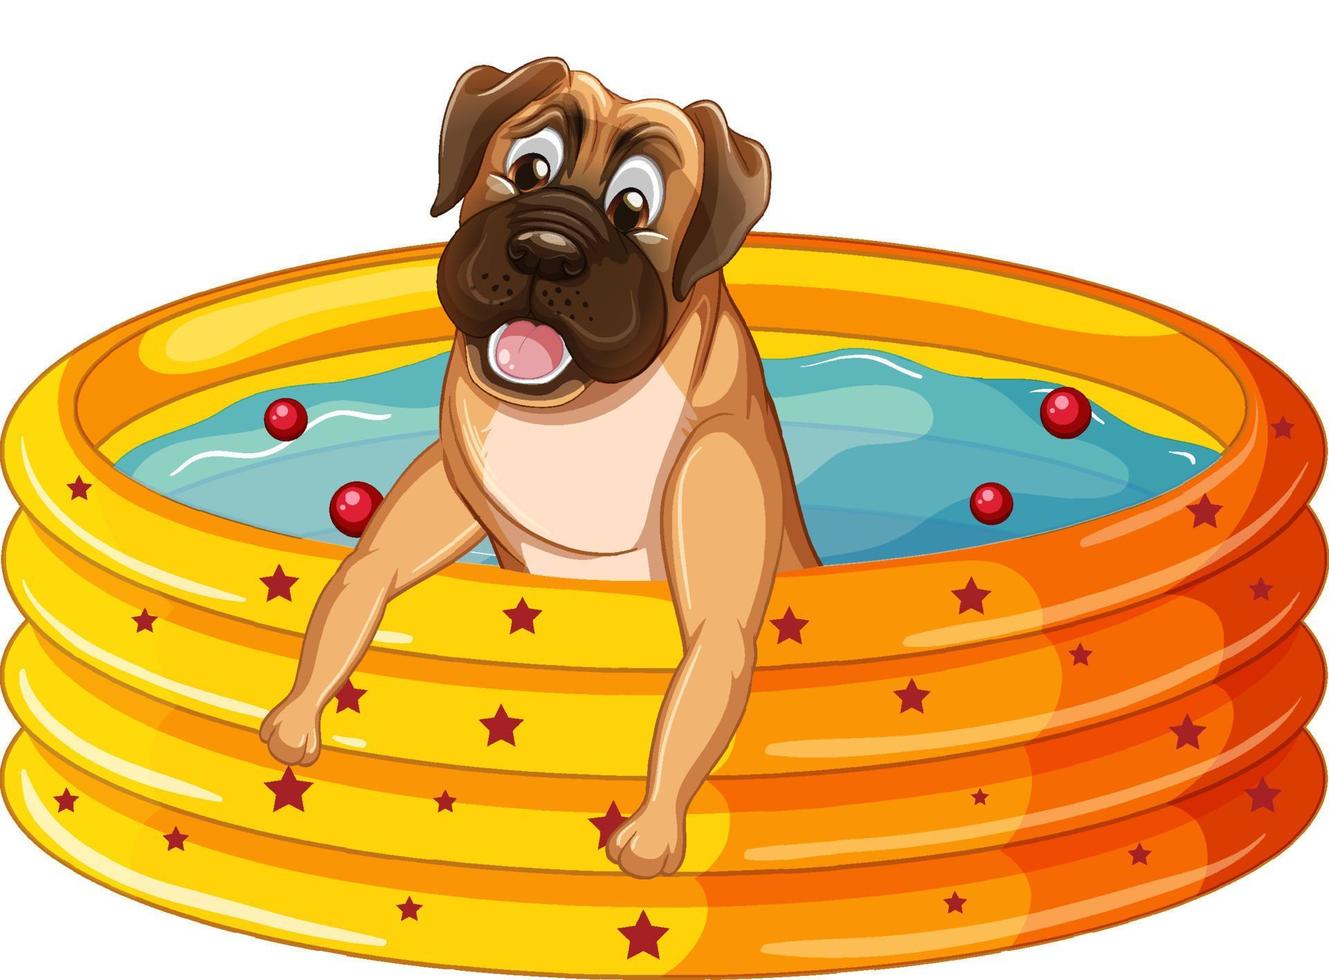 Hund badet im gelben Pool vektor